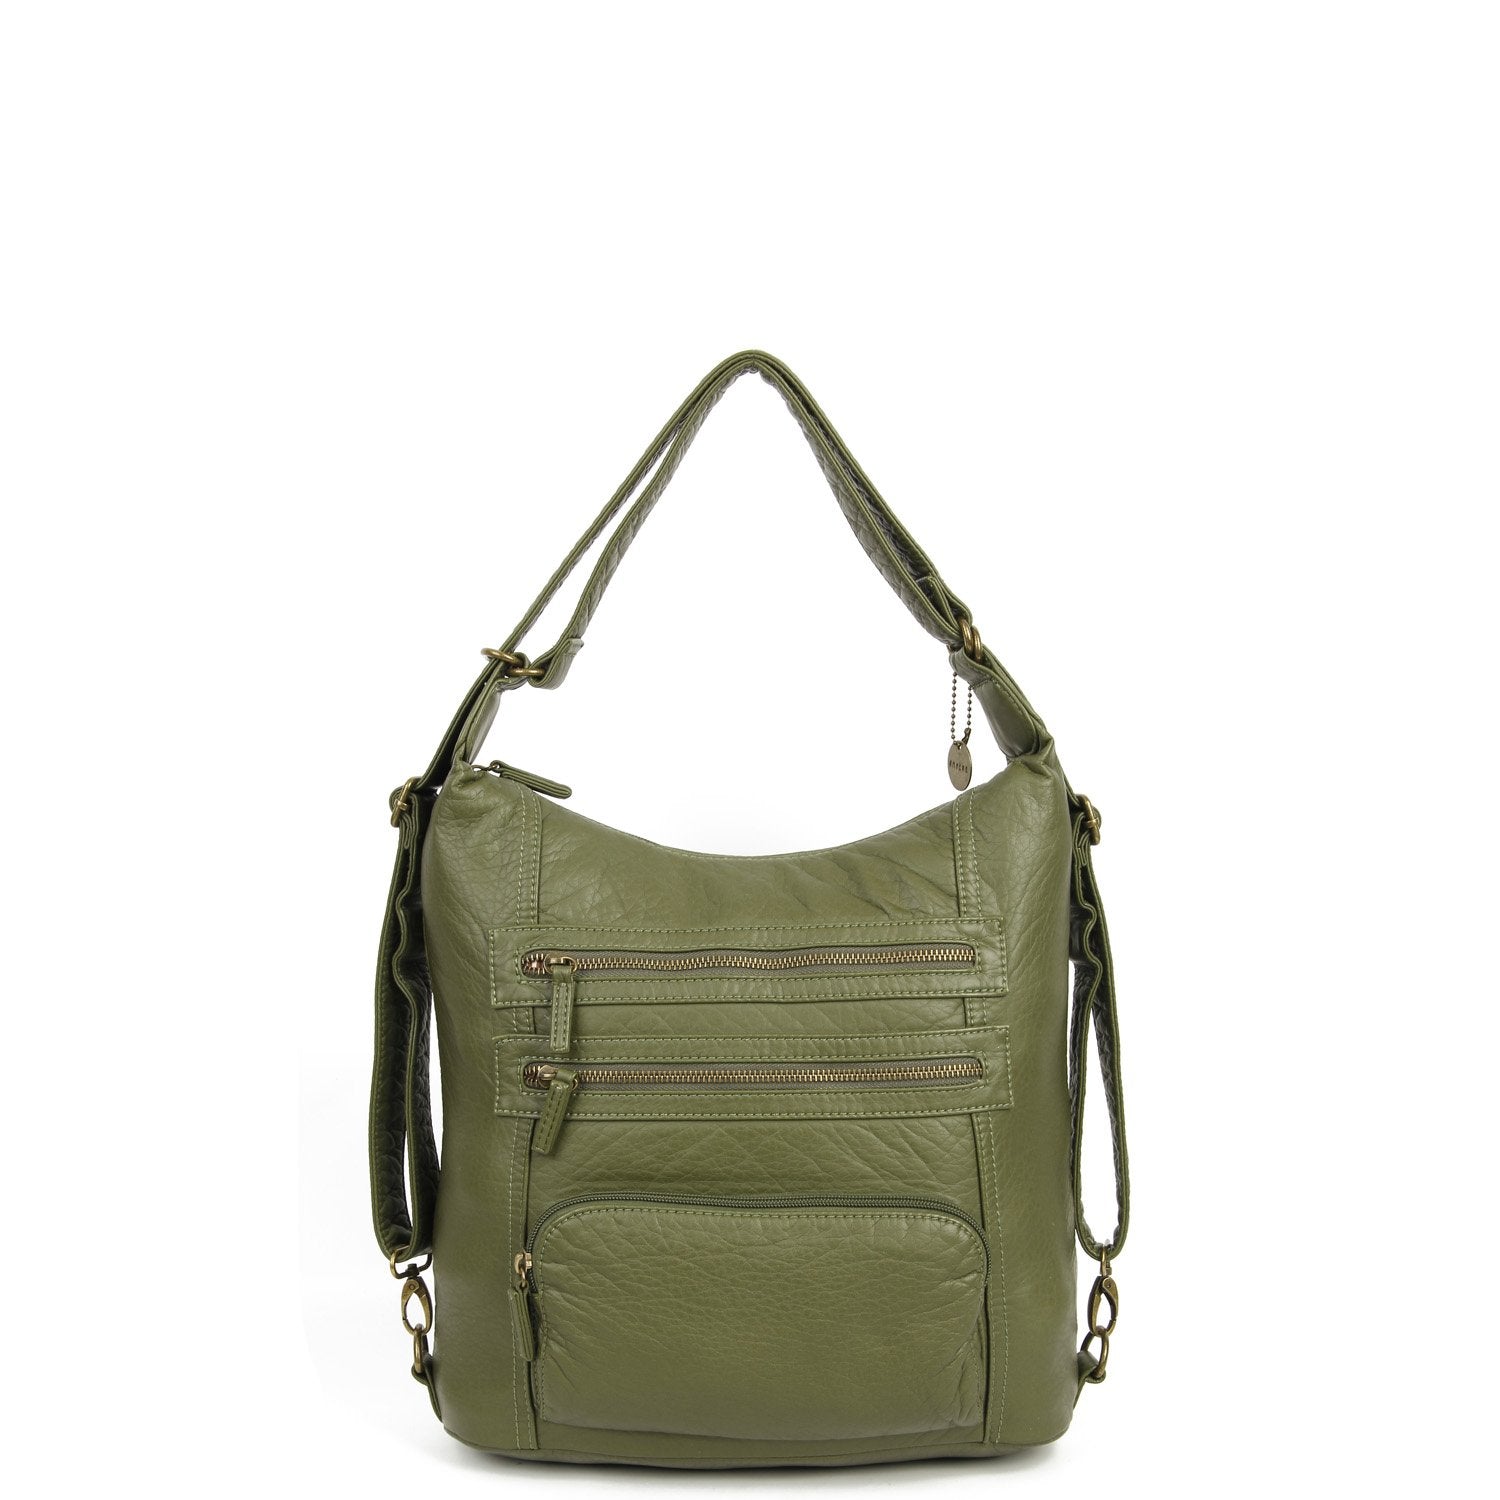 The Lisa Convertible Backpack Crossbody